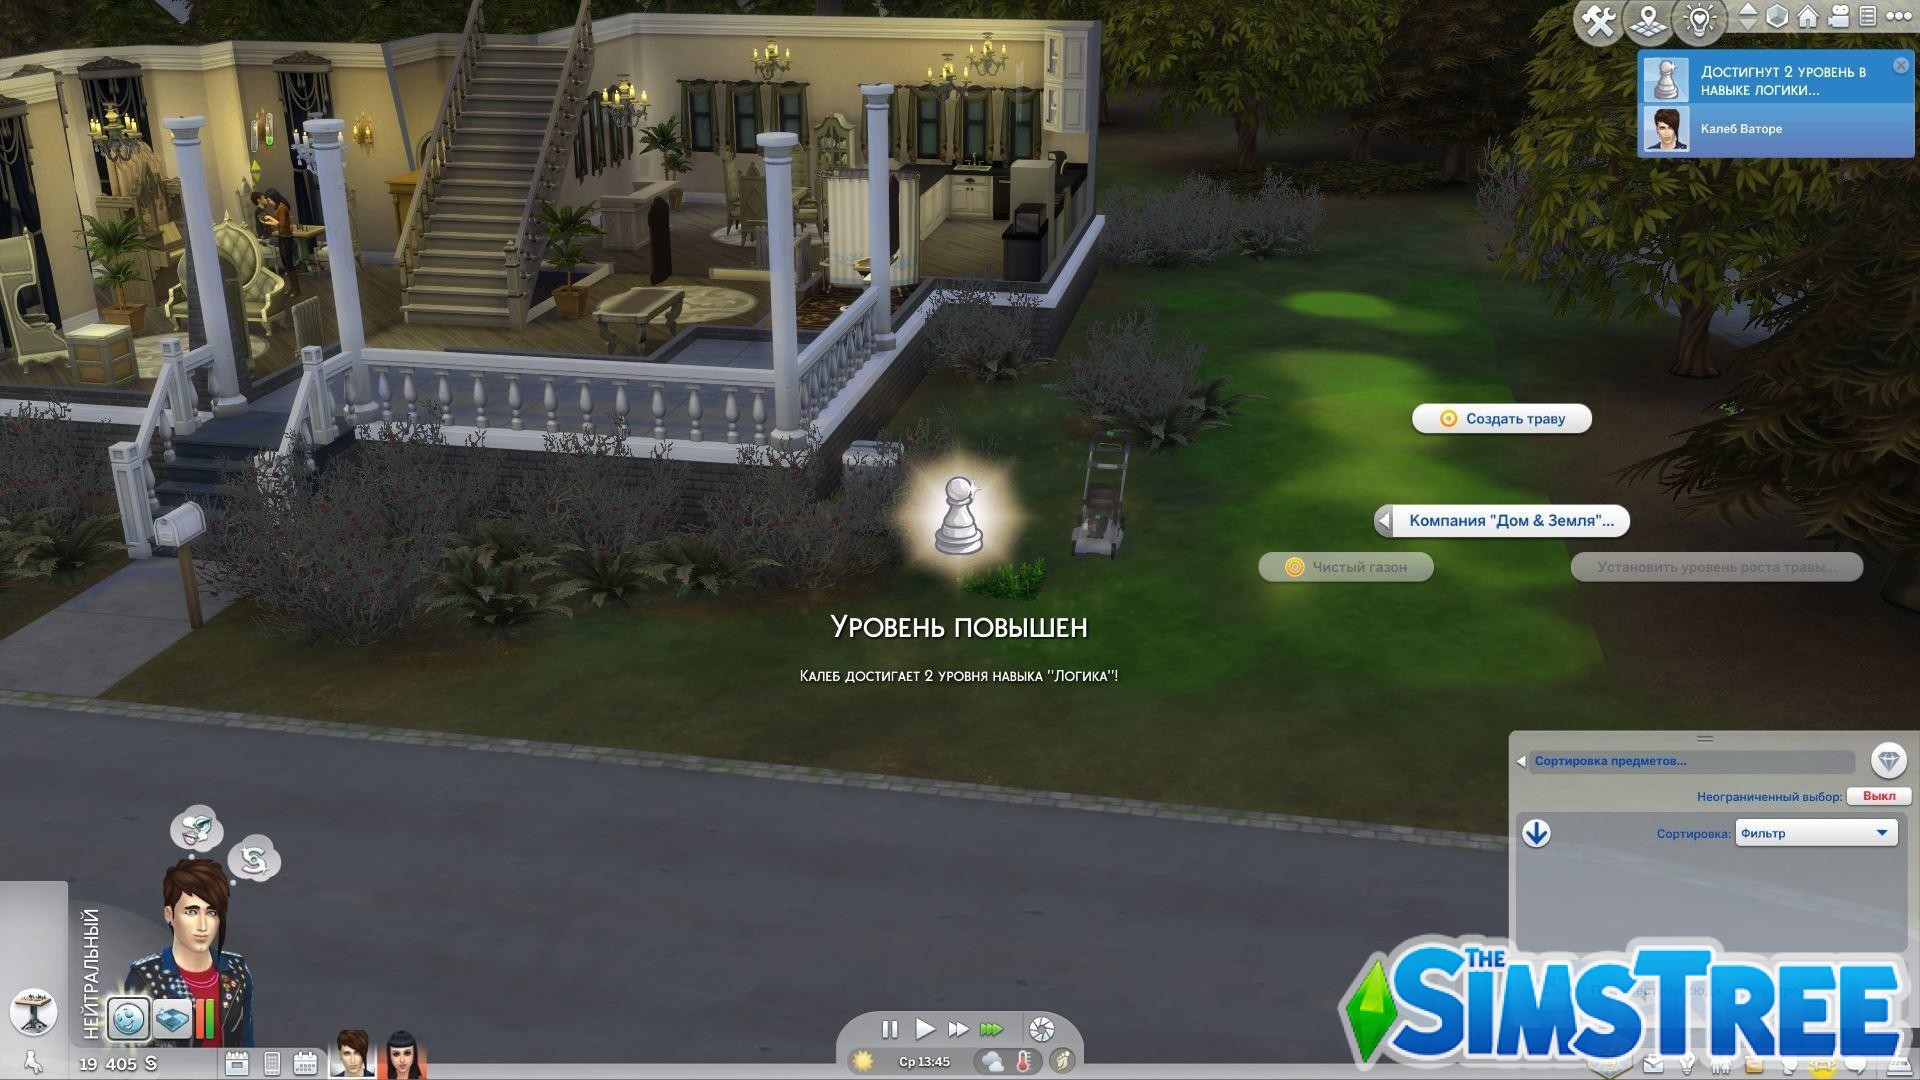 Мод «Компания Дом и земля или Home and land company» от simrealist для Sims 4